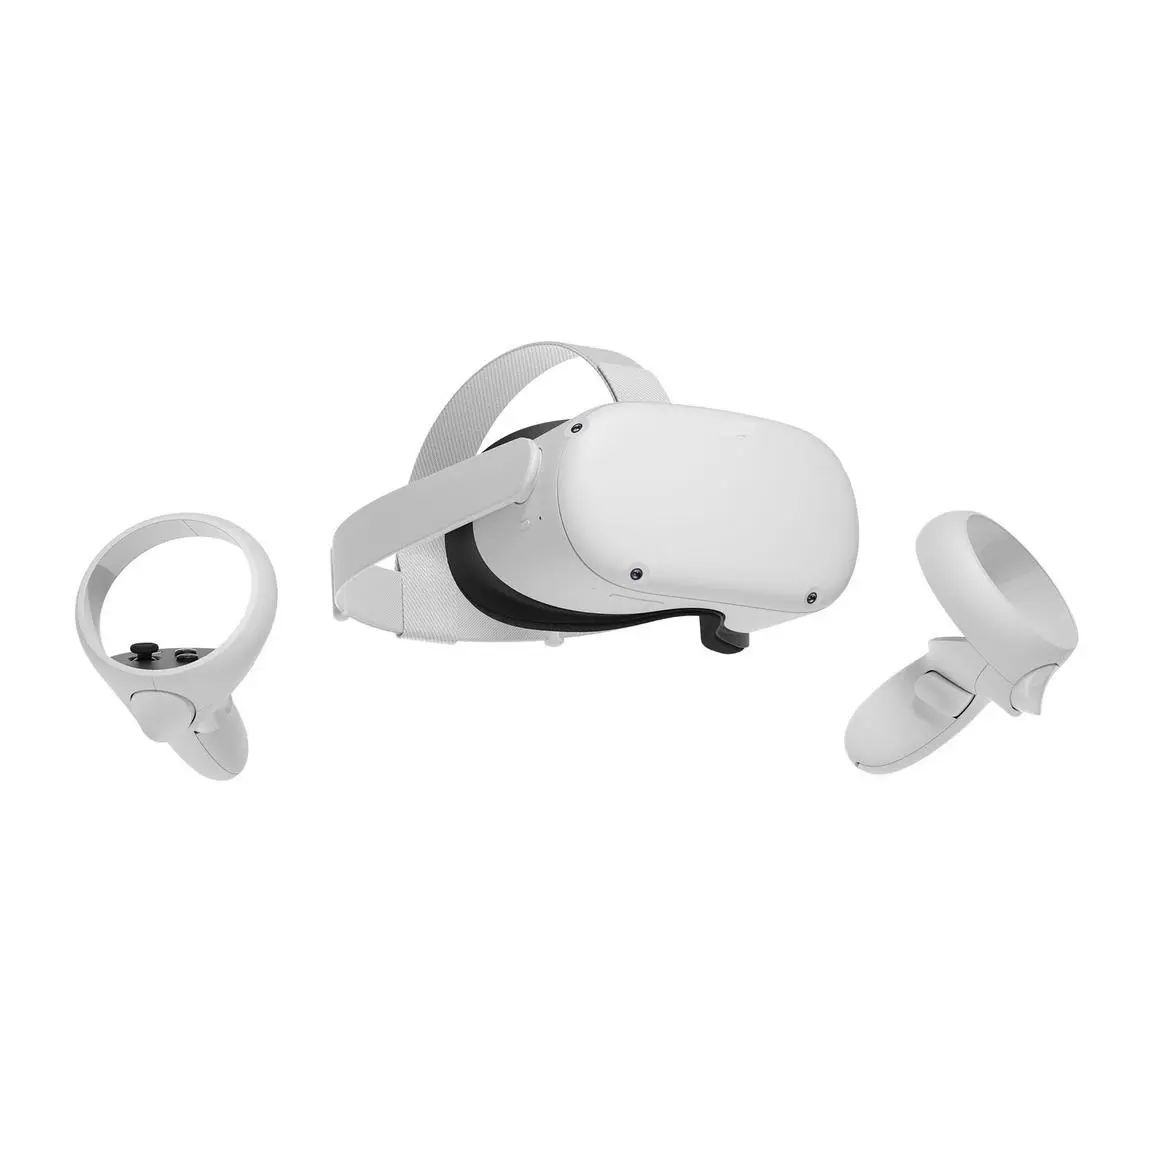 Neues meist verkauftes Metal Quests 2 Virtual Reality Headset - 128GB